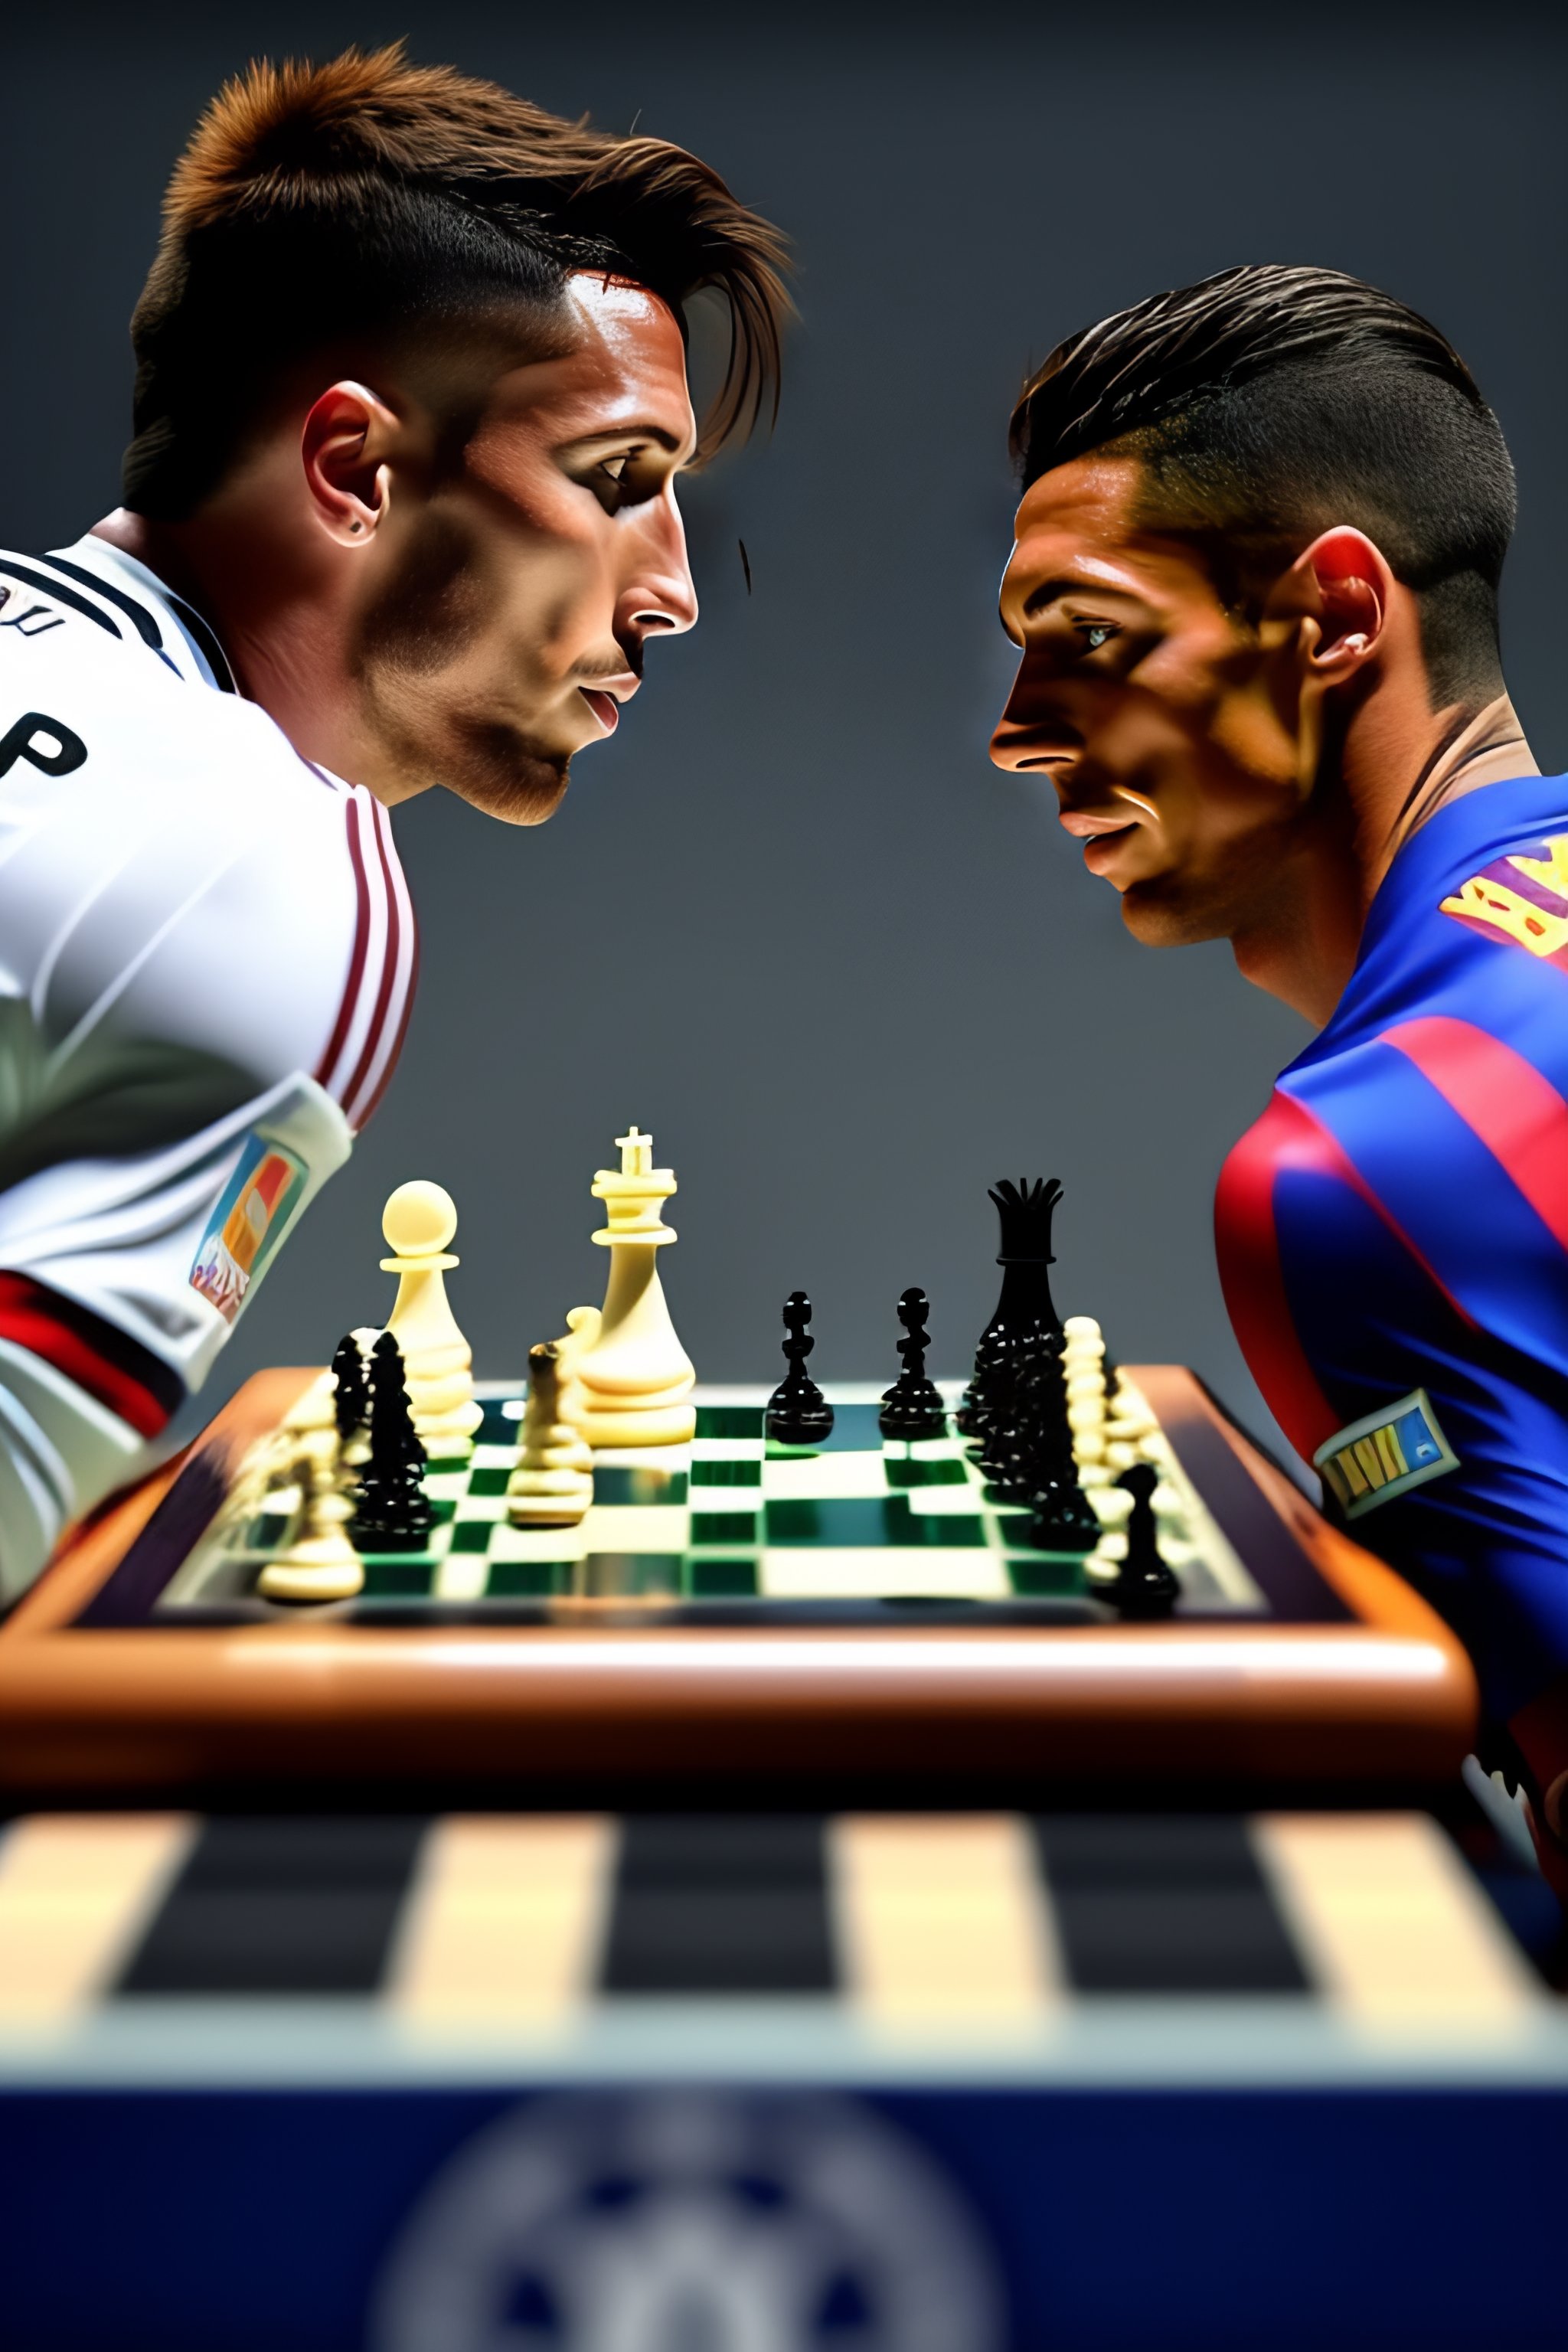 Messi Ronaldo chess wallpaper for phone